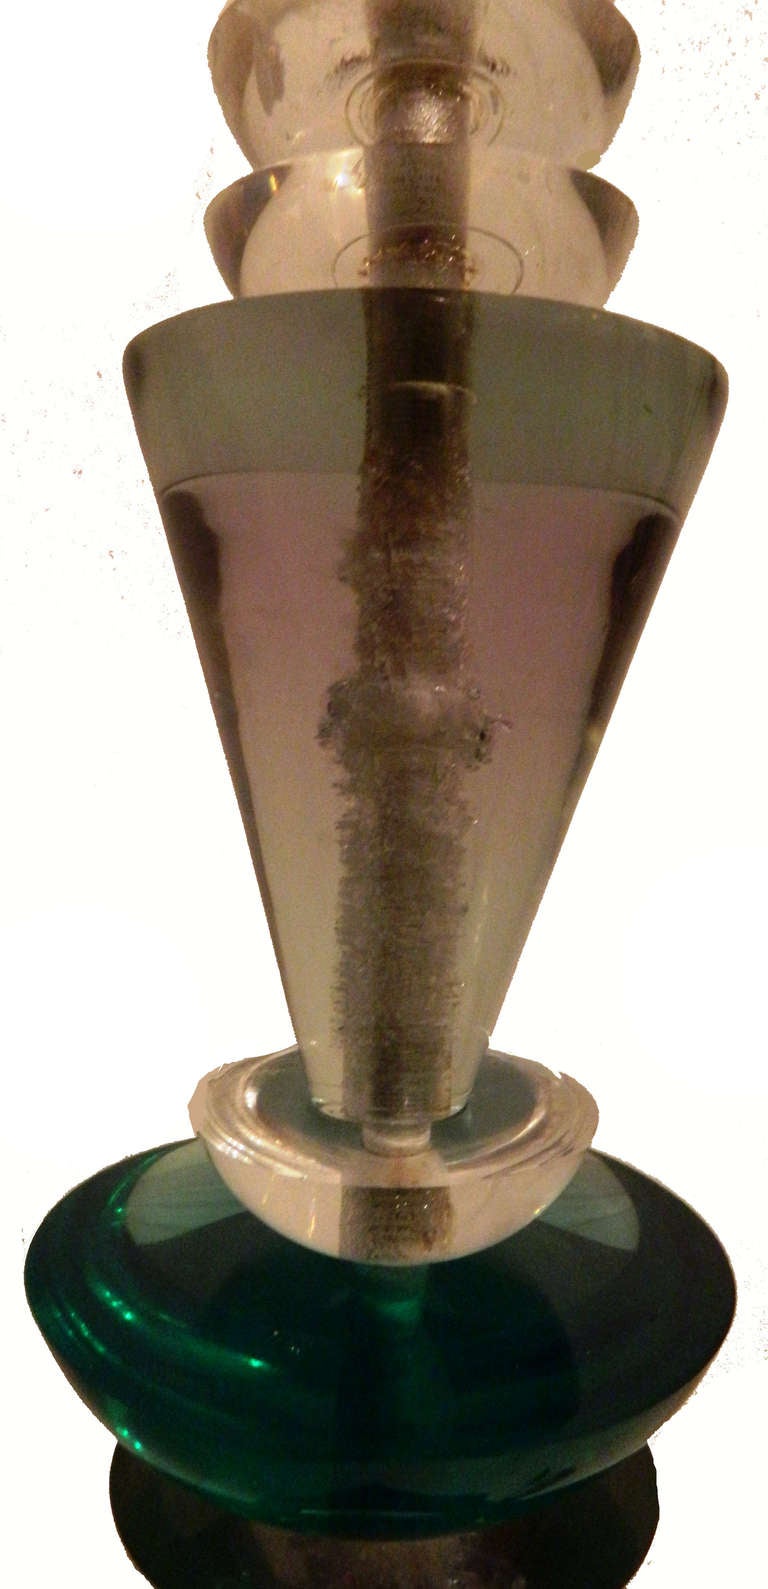 VanTeal circa 1970s glass, white and green Lucite table lamp. Origin: Miami.

Measurements: 35